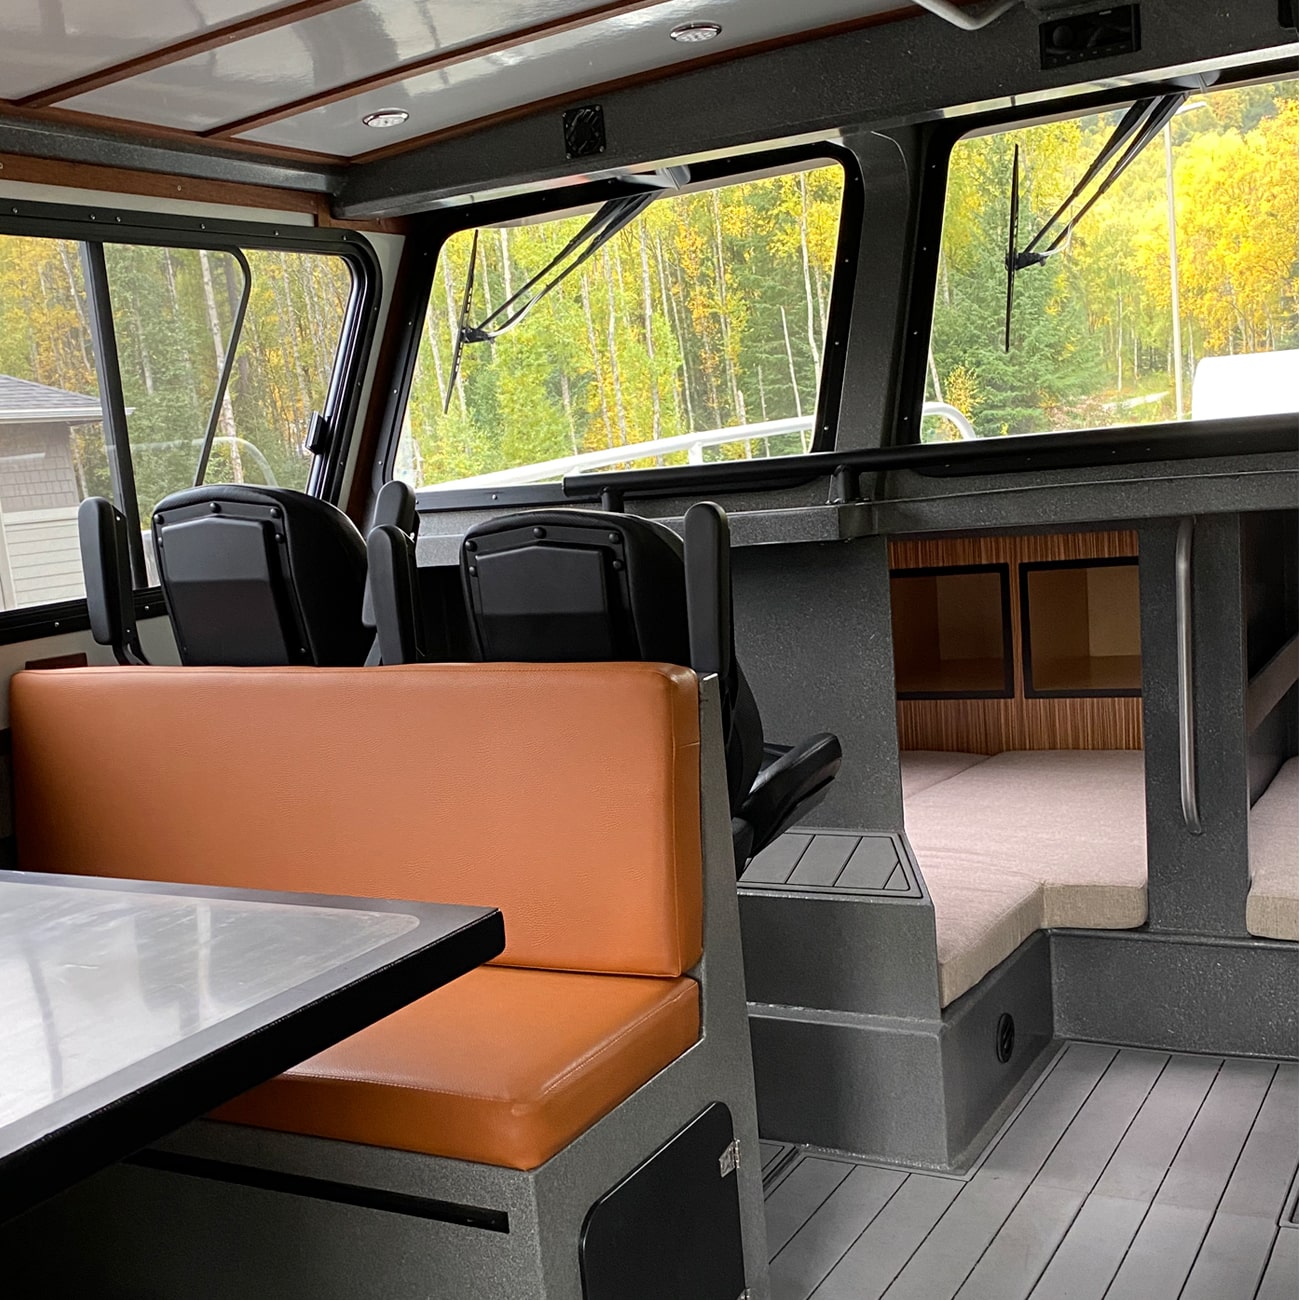 Interior of 36 foot aluminum Cuddy Cabin boat manufactured Sidney BC British Columbia Canada by JR Marine